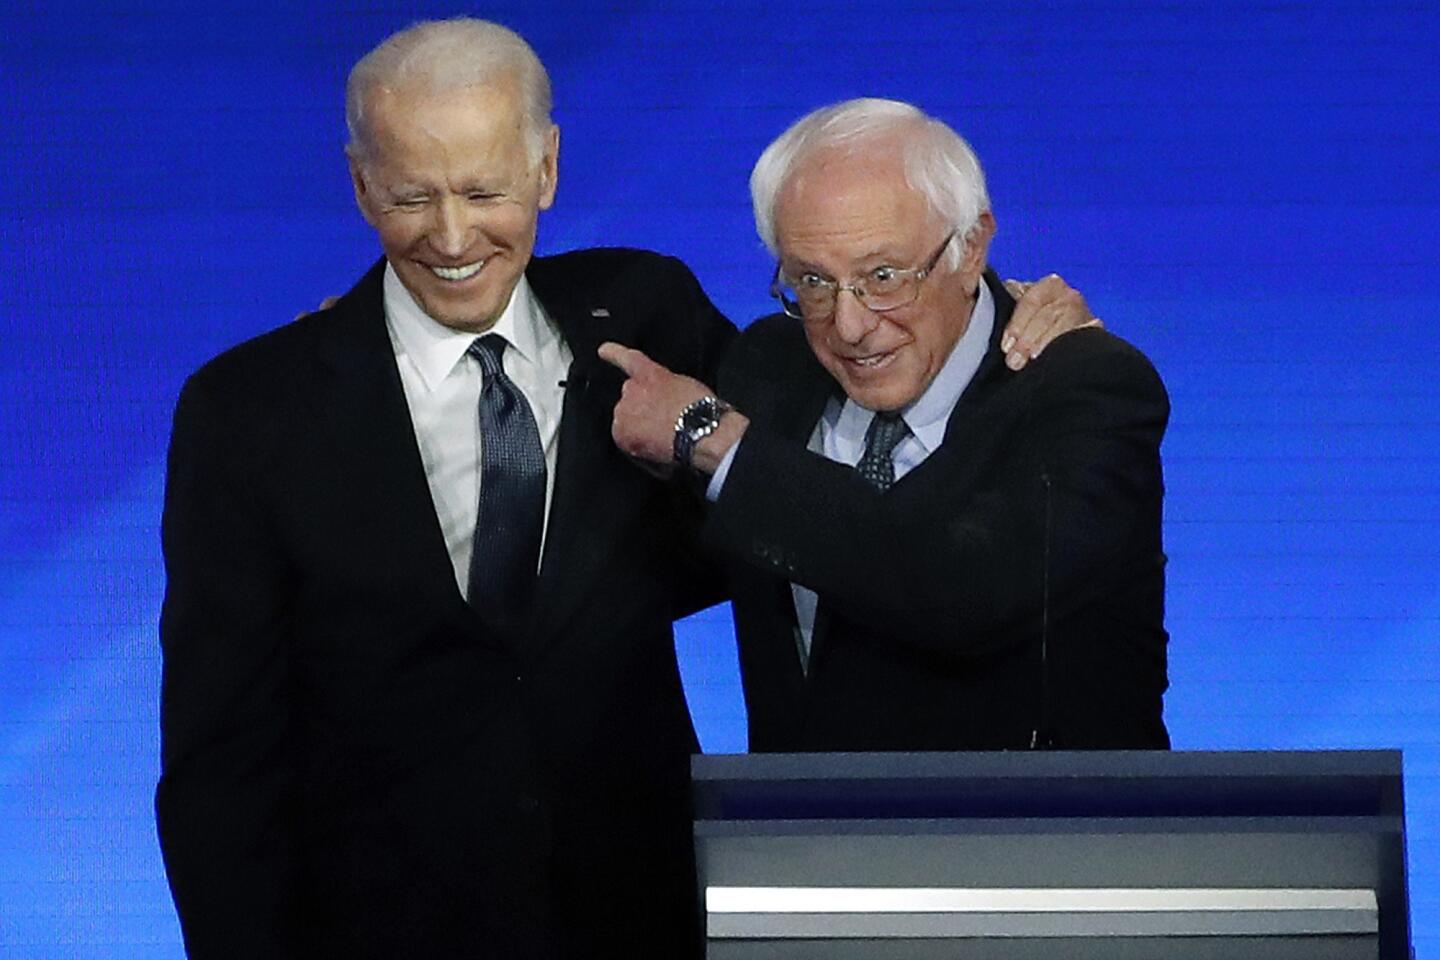 Former Vice President Joe Biden, left, embraces Sen. Bernie Sanders during the Democratic presidential primary debate on Friday in Manchester, N.H.